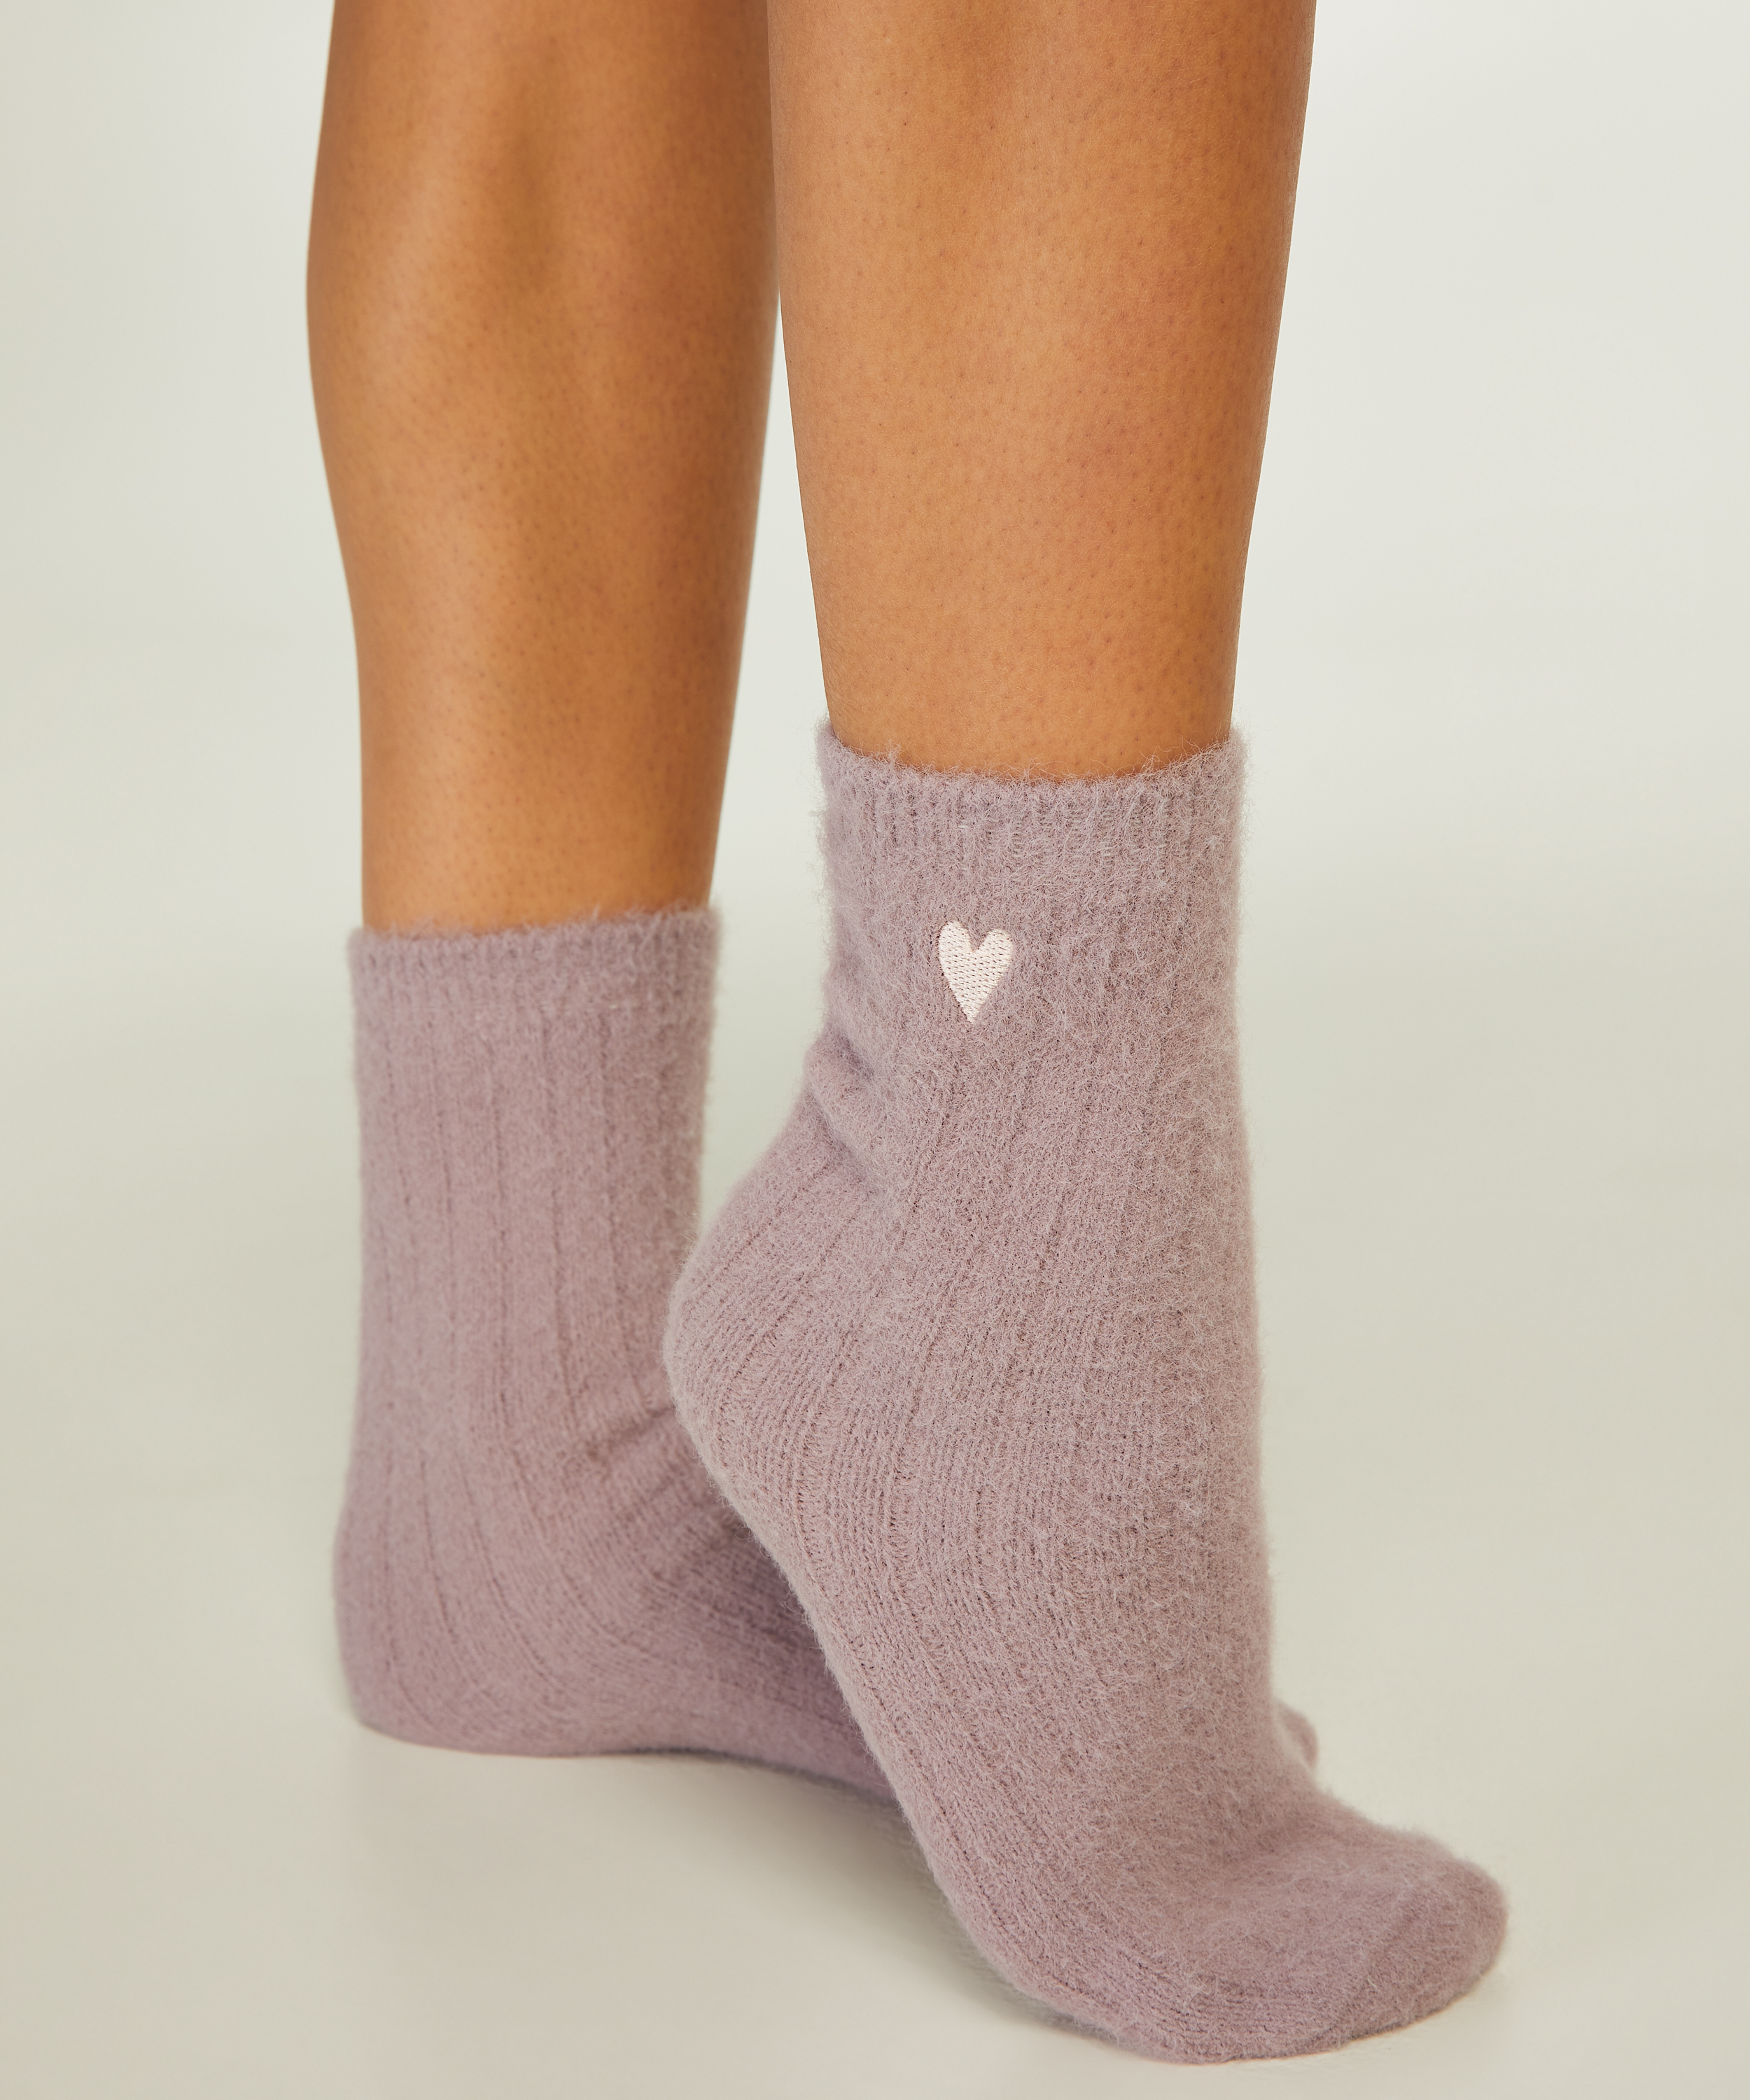 Fluffy Socks, Purple, main